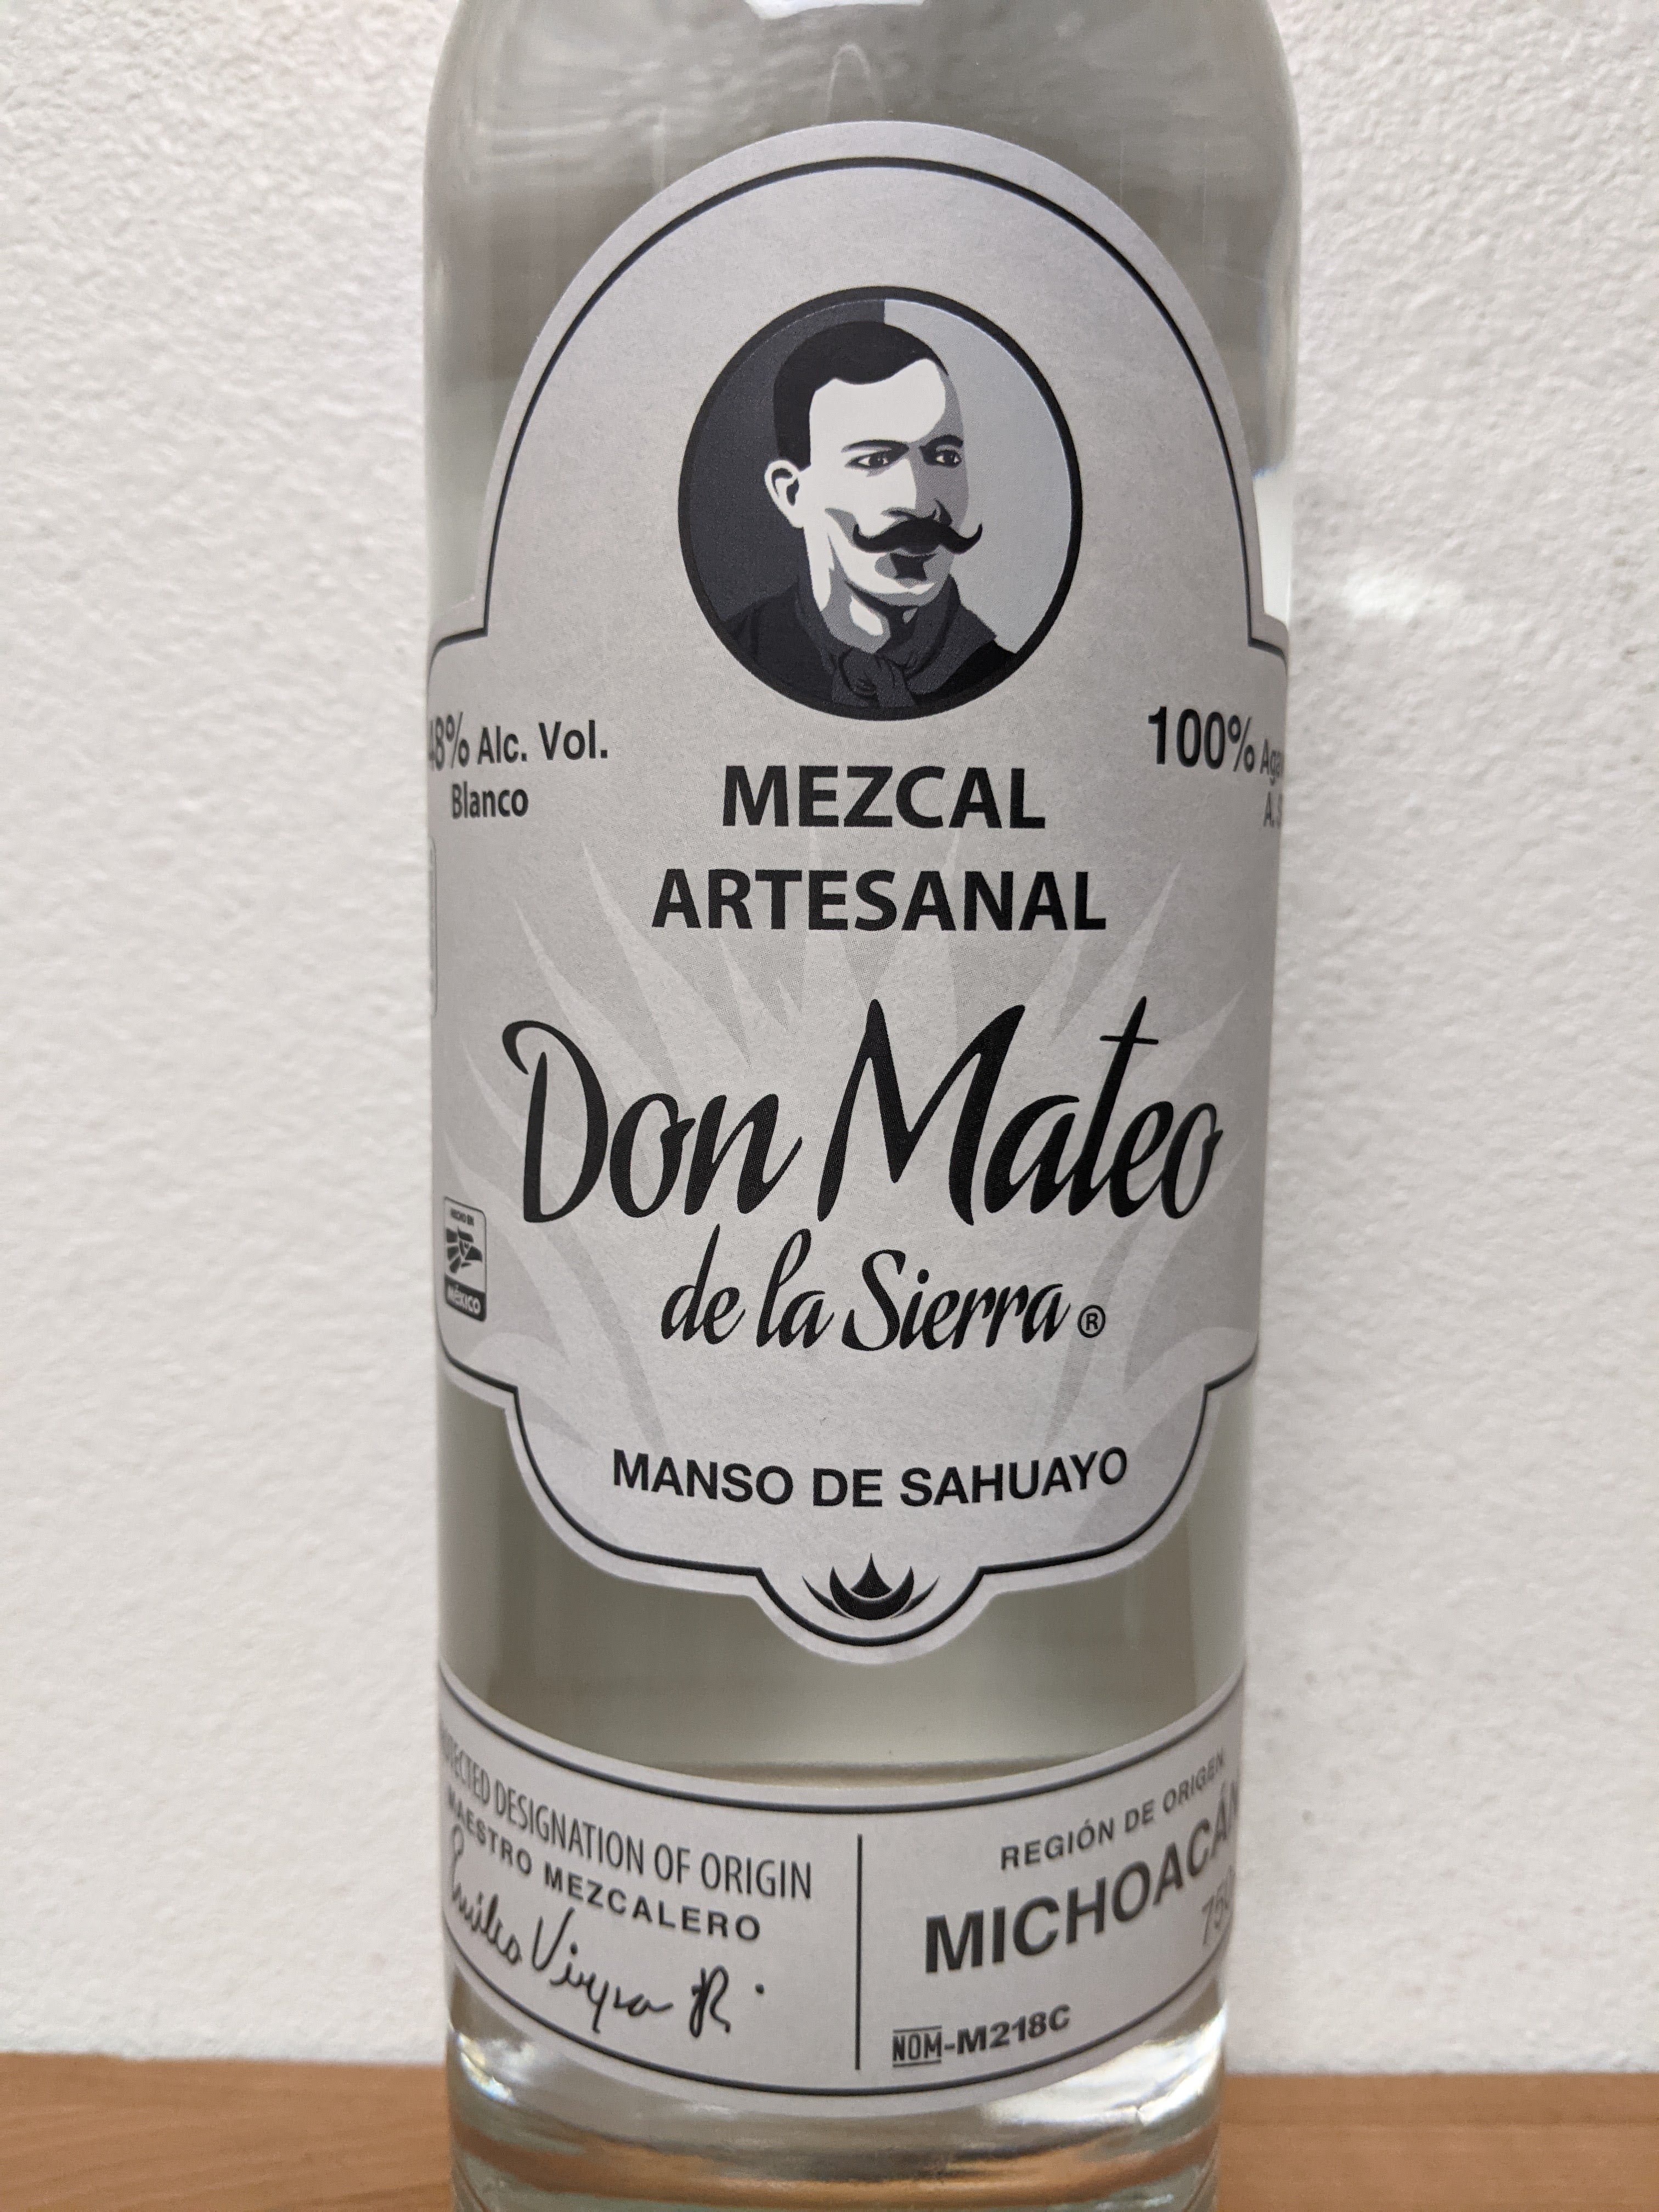 Don Mateo, Manso de Sahuayo, Artesanal, Mezcal